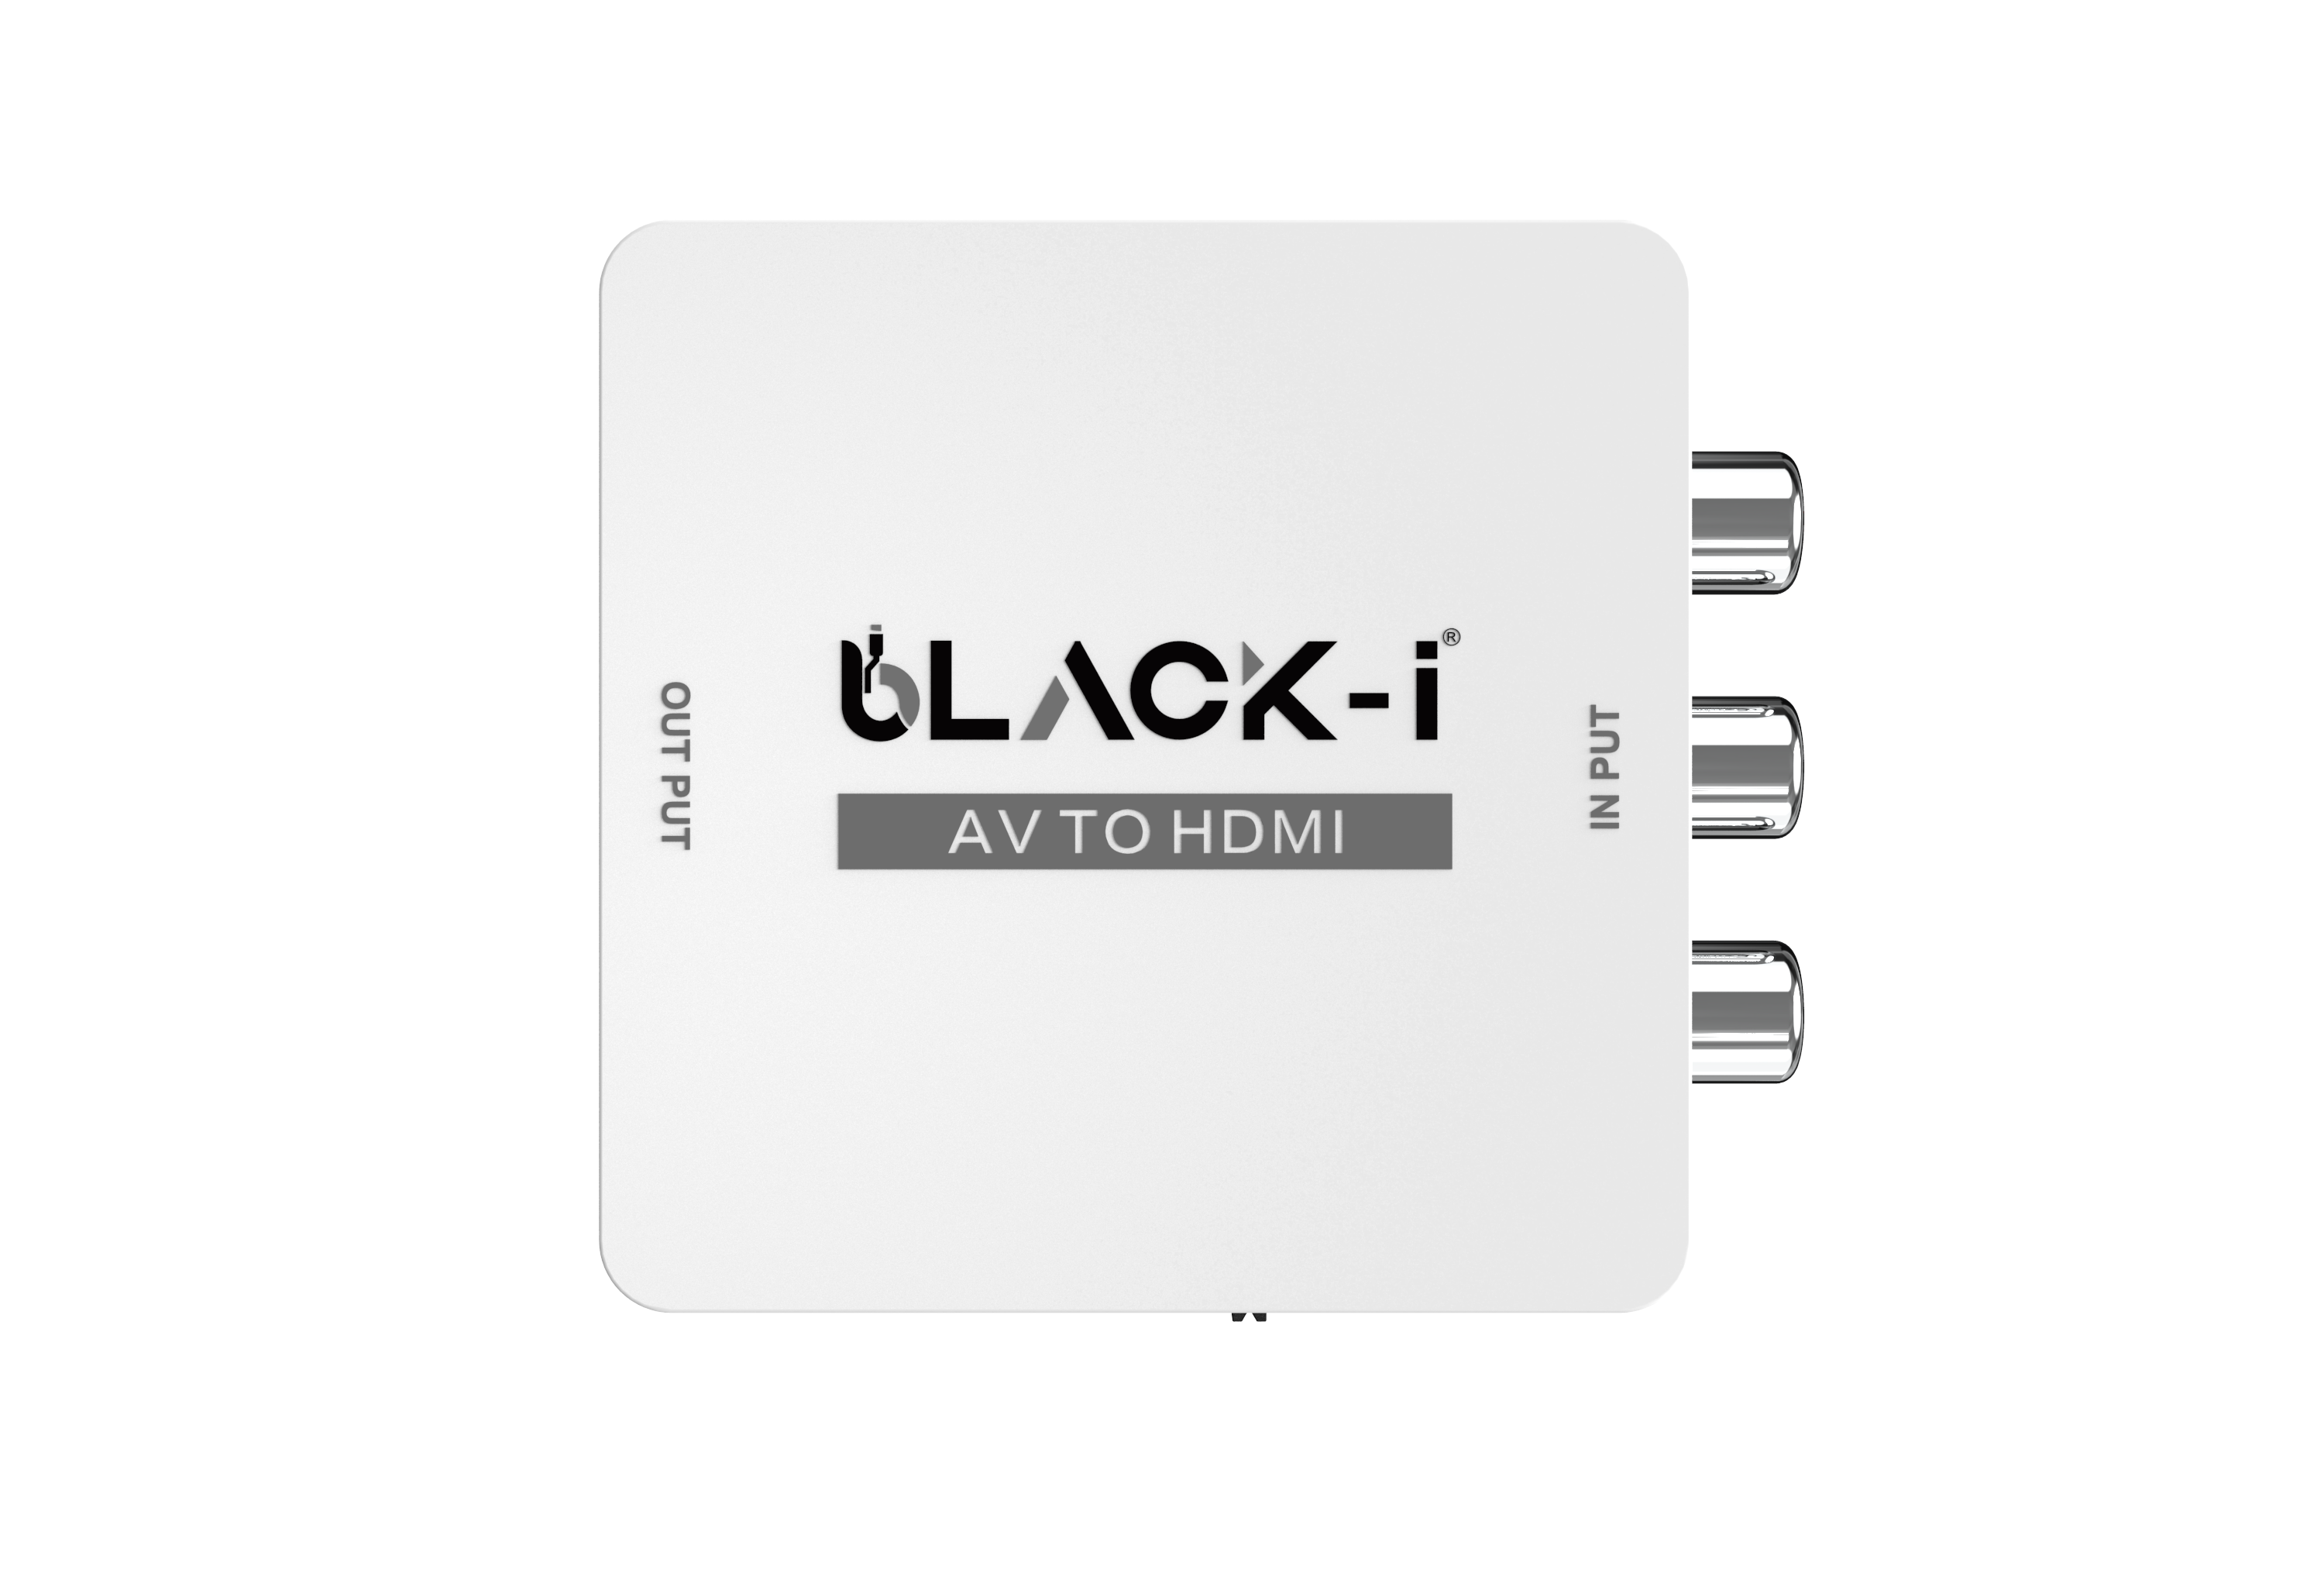 Black-i AV to HDMI Signal Converter